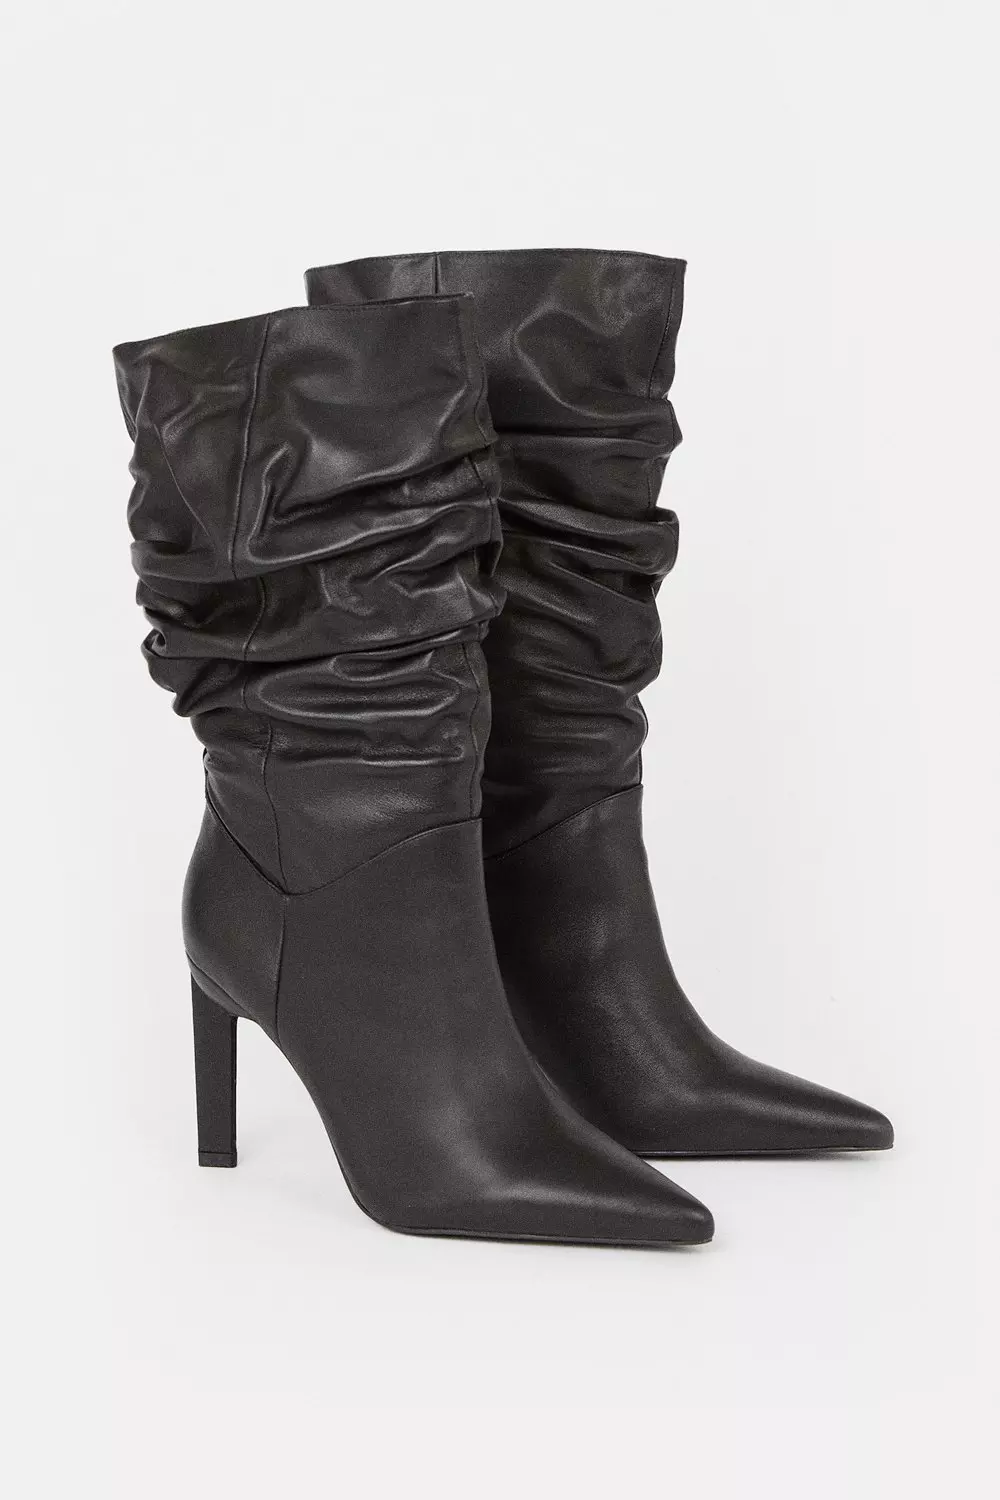 Munlar Women's Low-Heeled Mid Calf Boots-Black Heel Boots Dress